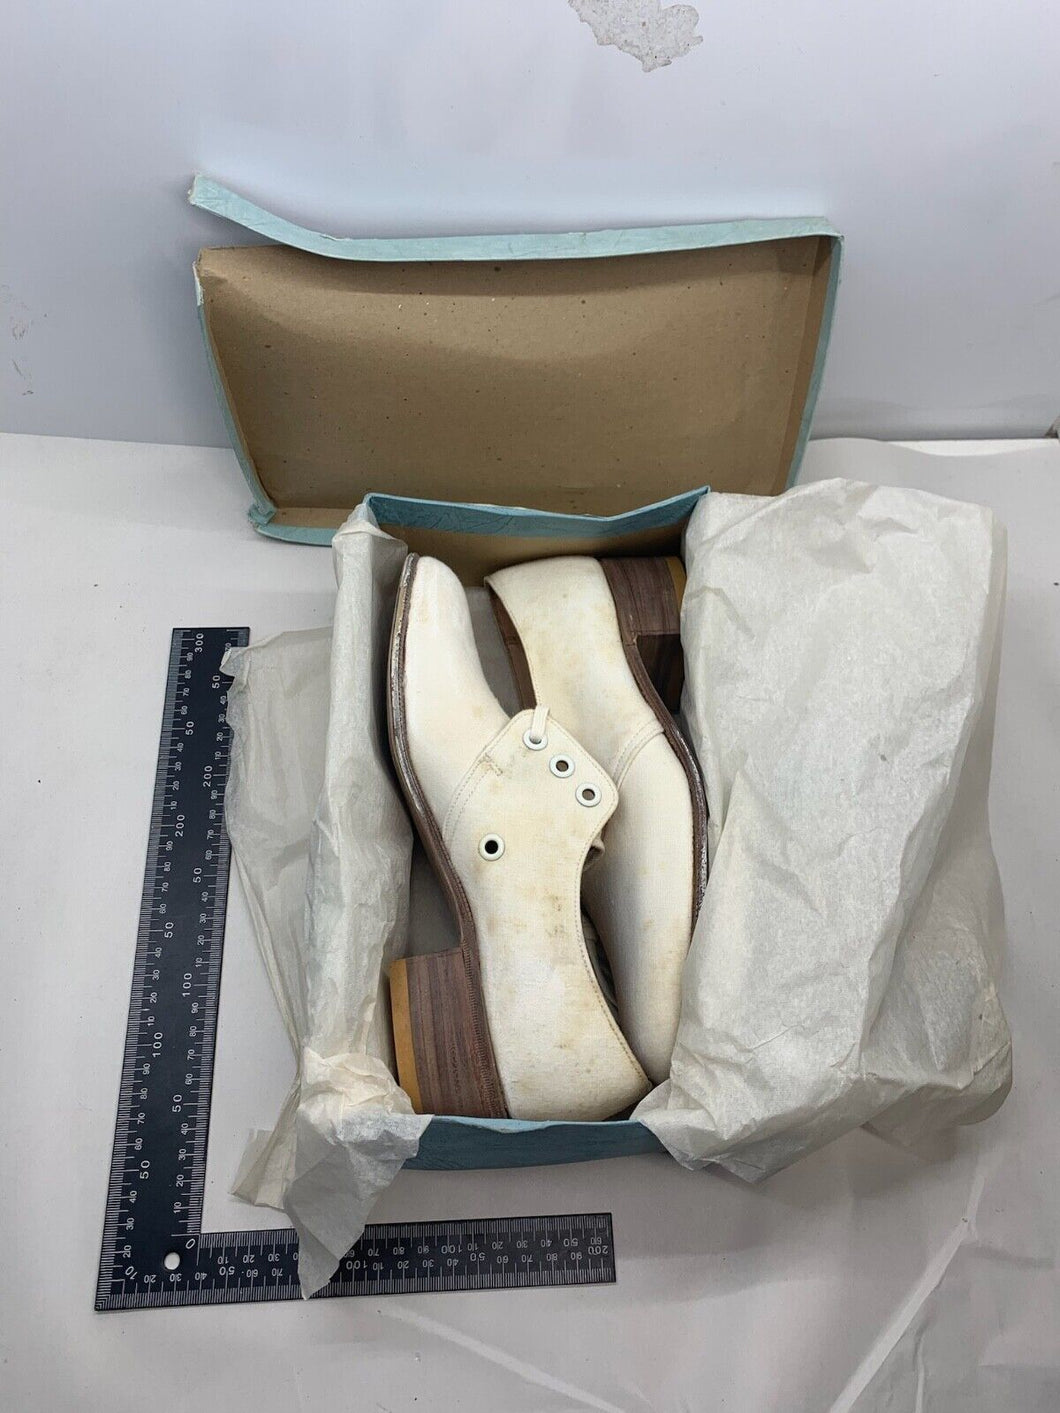 Original WW2 British Army Women's White Summer Shoes - ATS WAAF - Size 240s